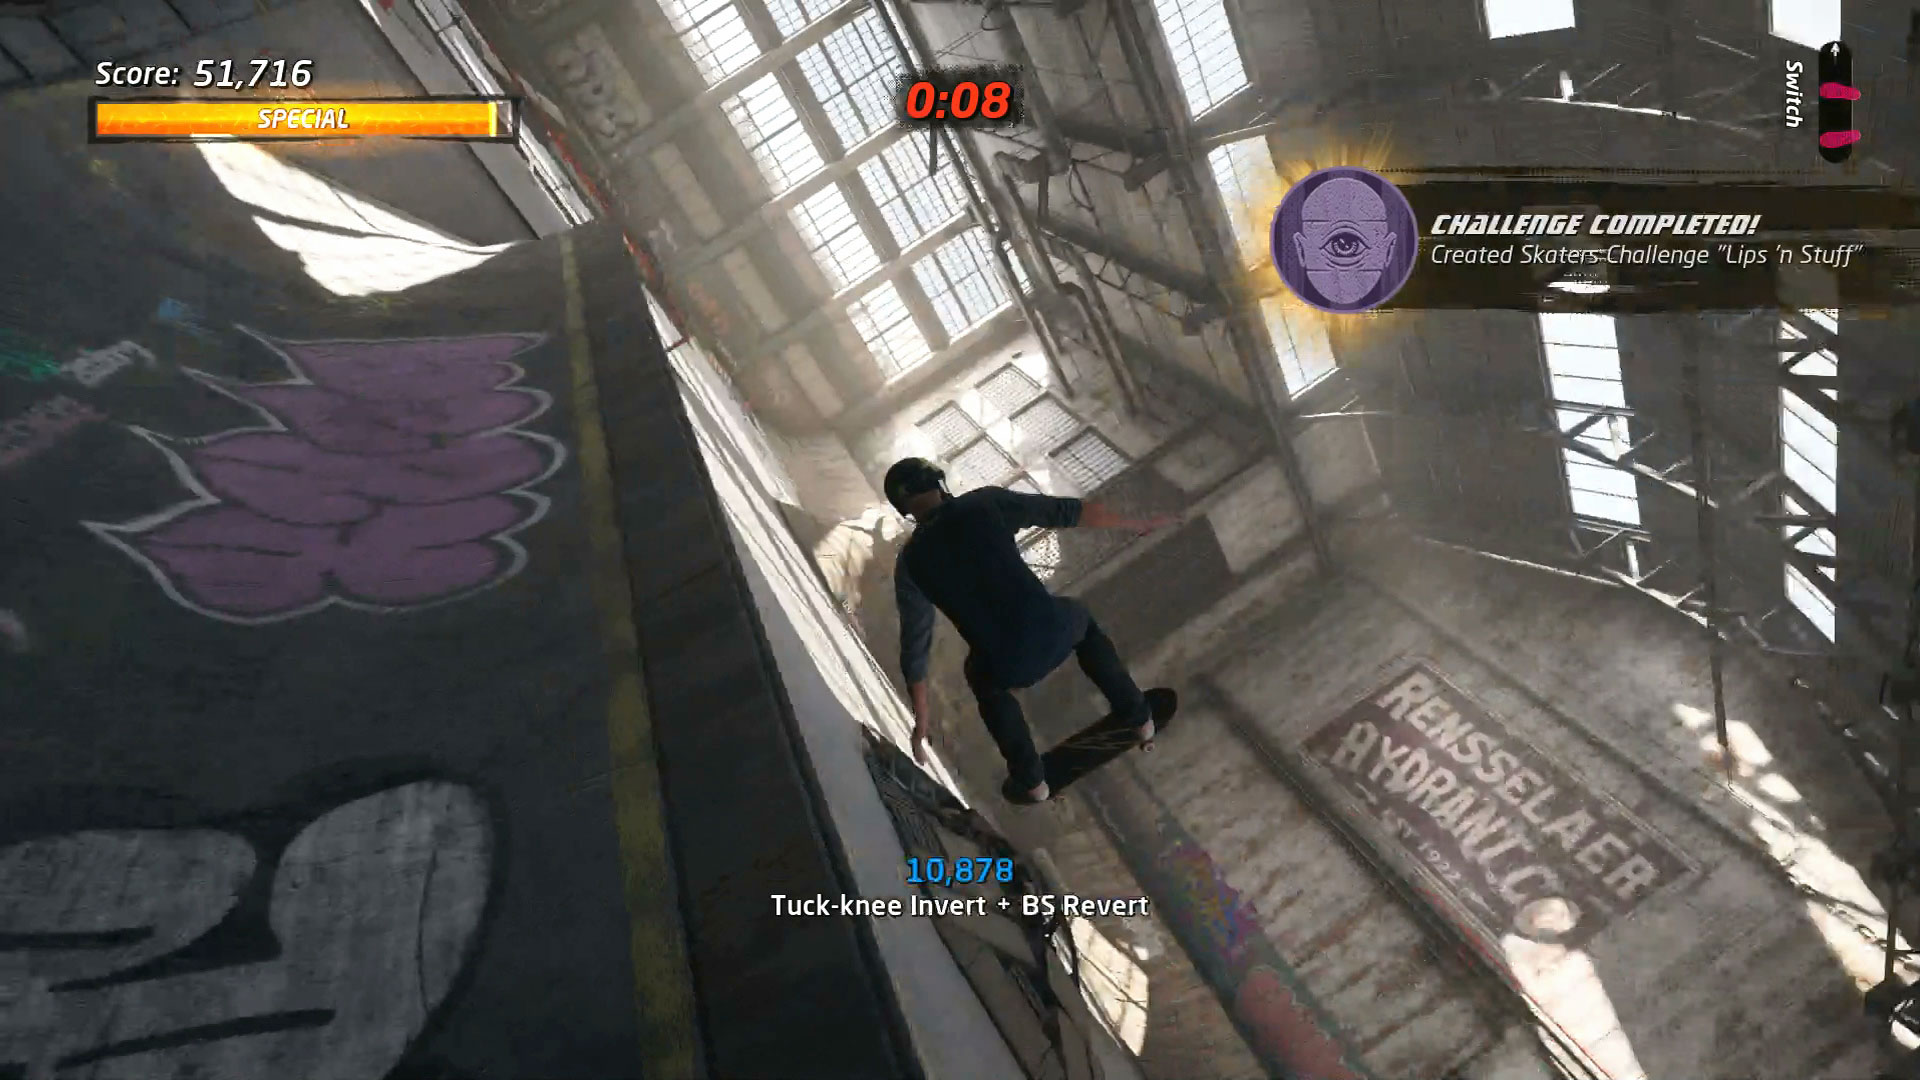 Tony Hawk's Pro Skater 3 (PlayStation) · RetroAchievements